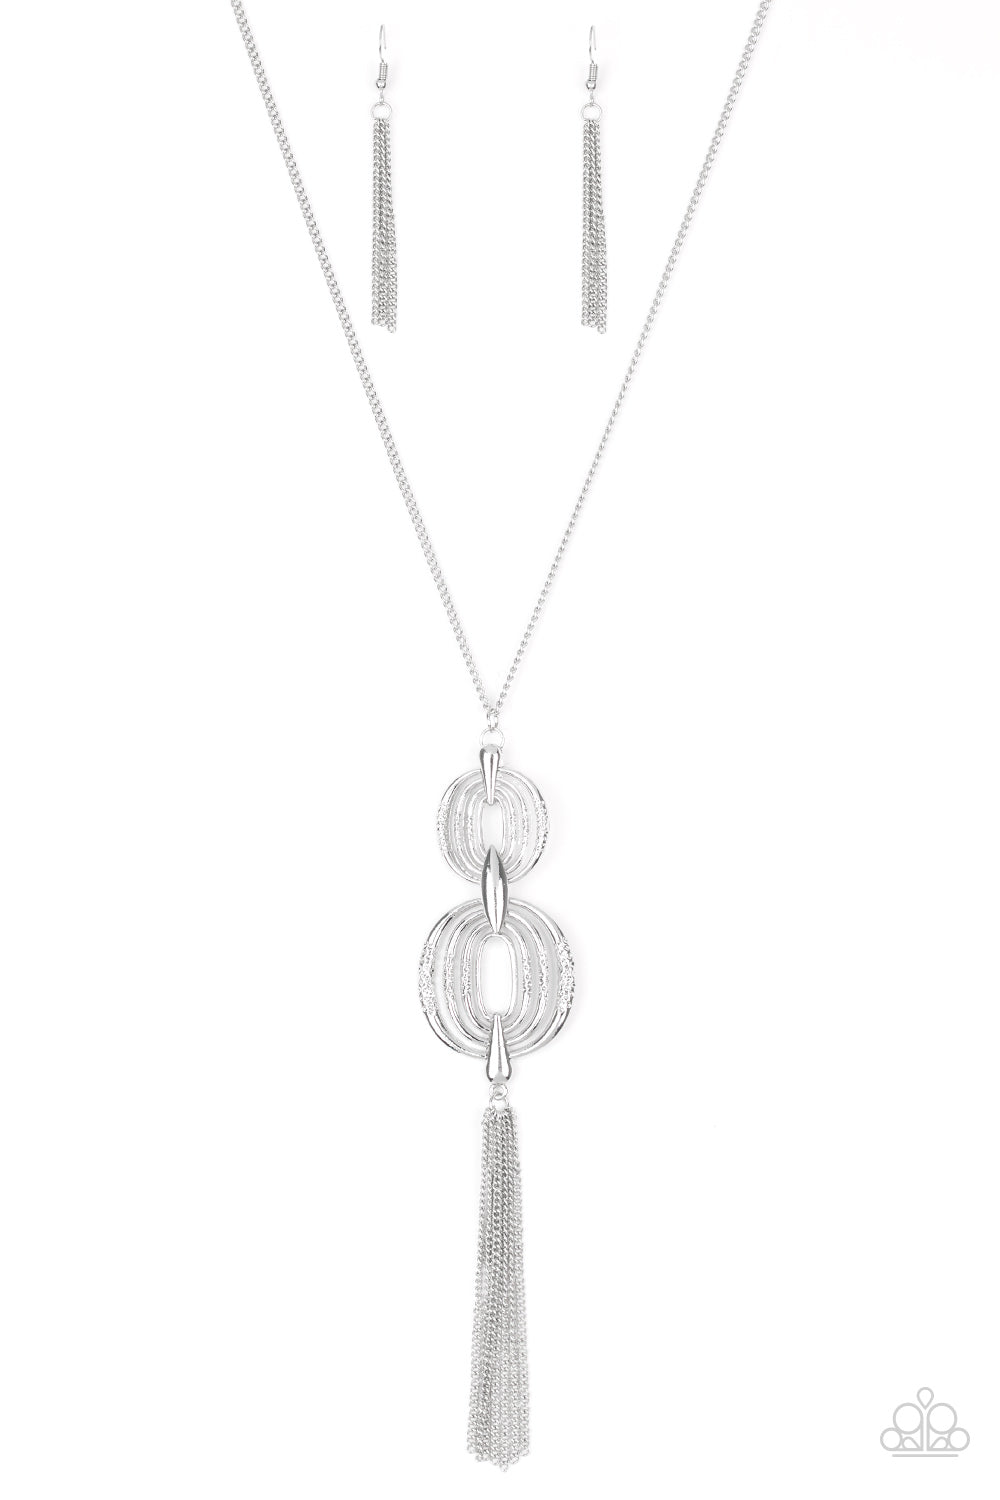 Timelessly Tasseled Silver Necklace freeshipping - JewLz4u Gemstone Gallery